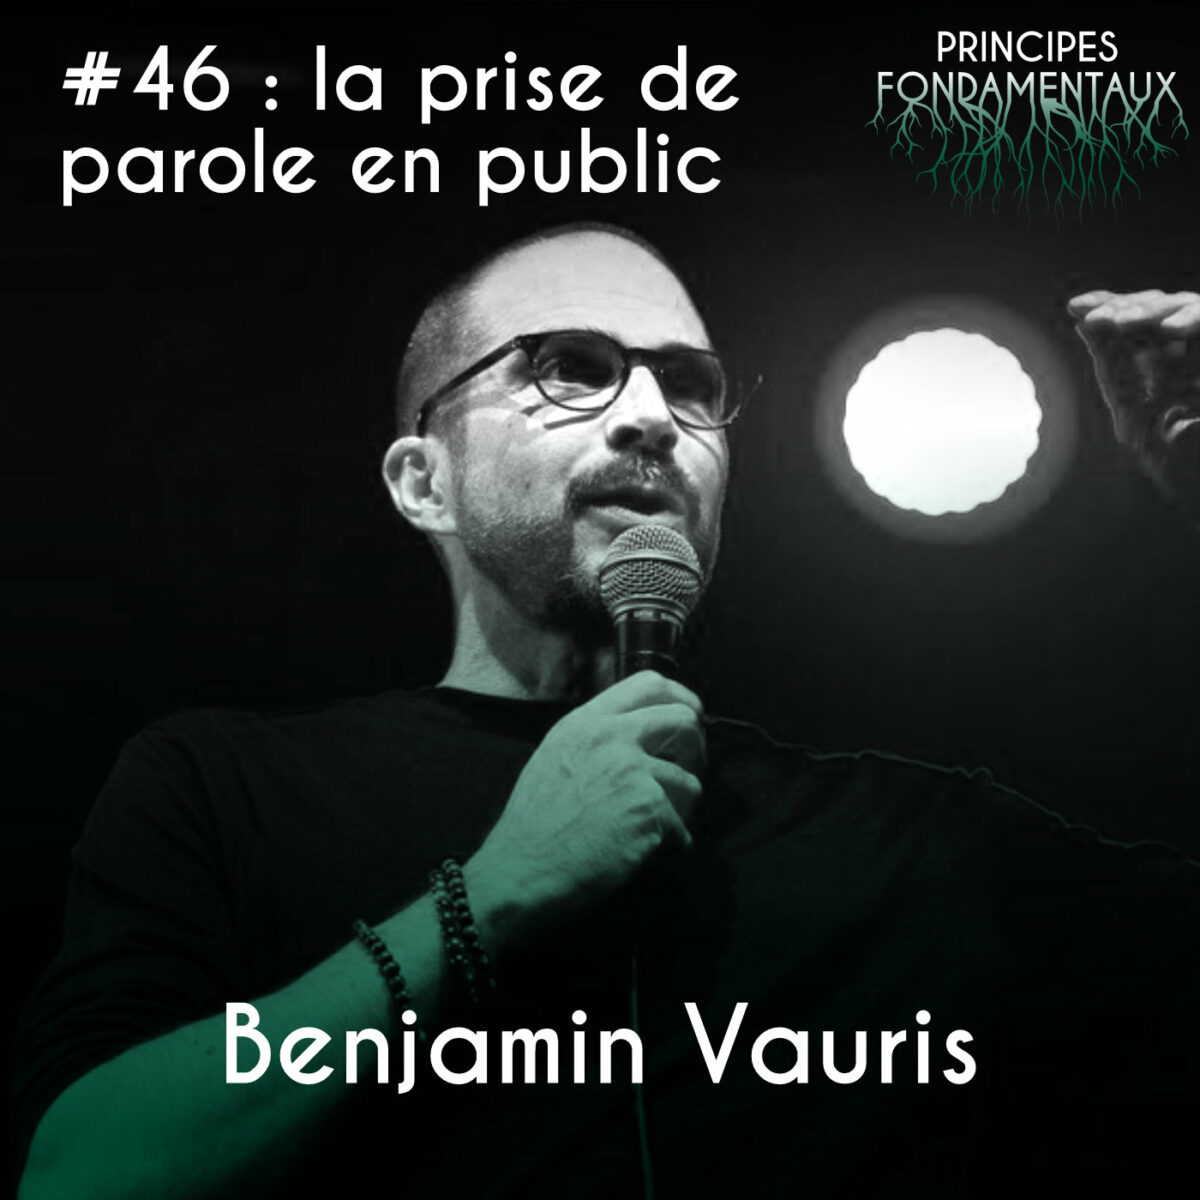 #46 : Benjamin Vauris - la prise de parole en public